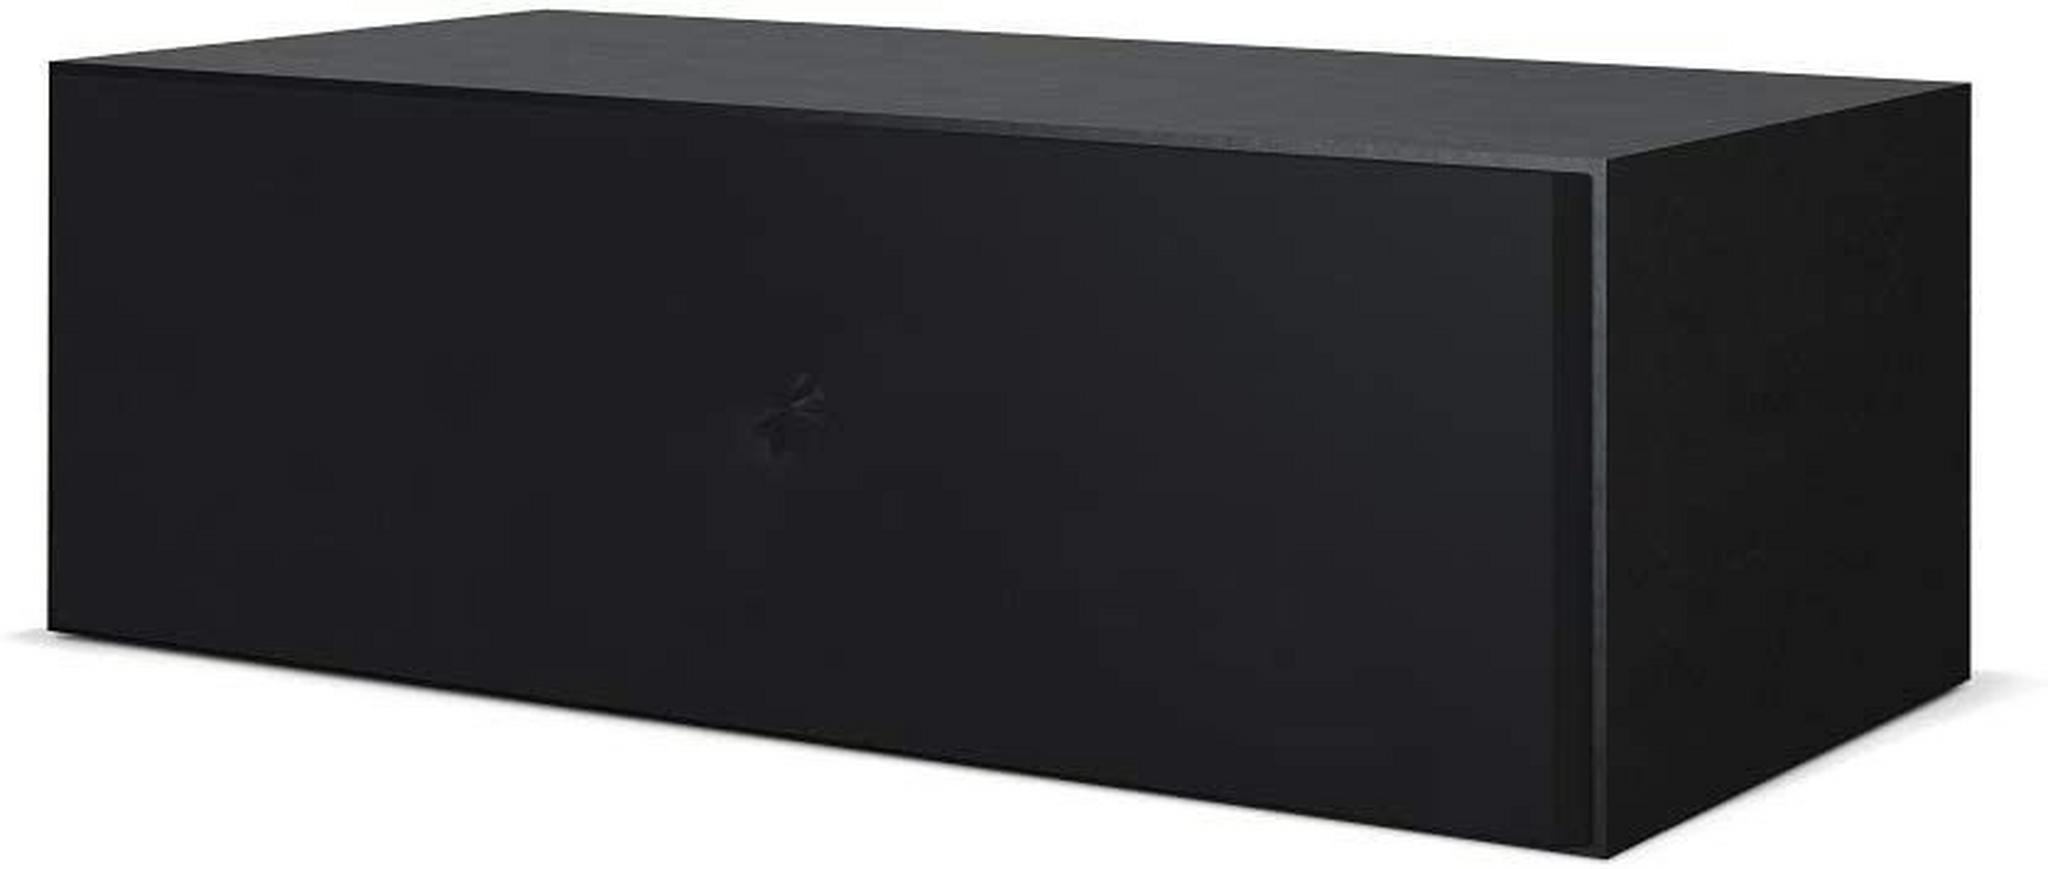 KEF Q650c Center Channel Speaker - Black